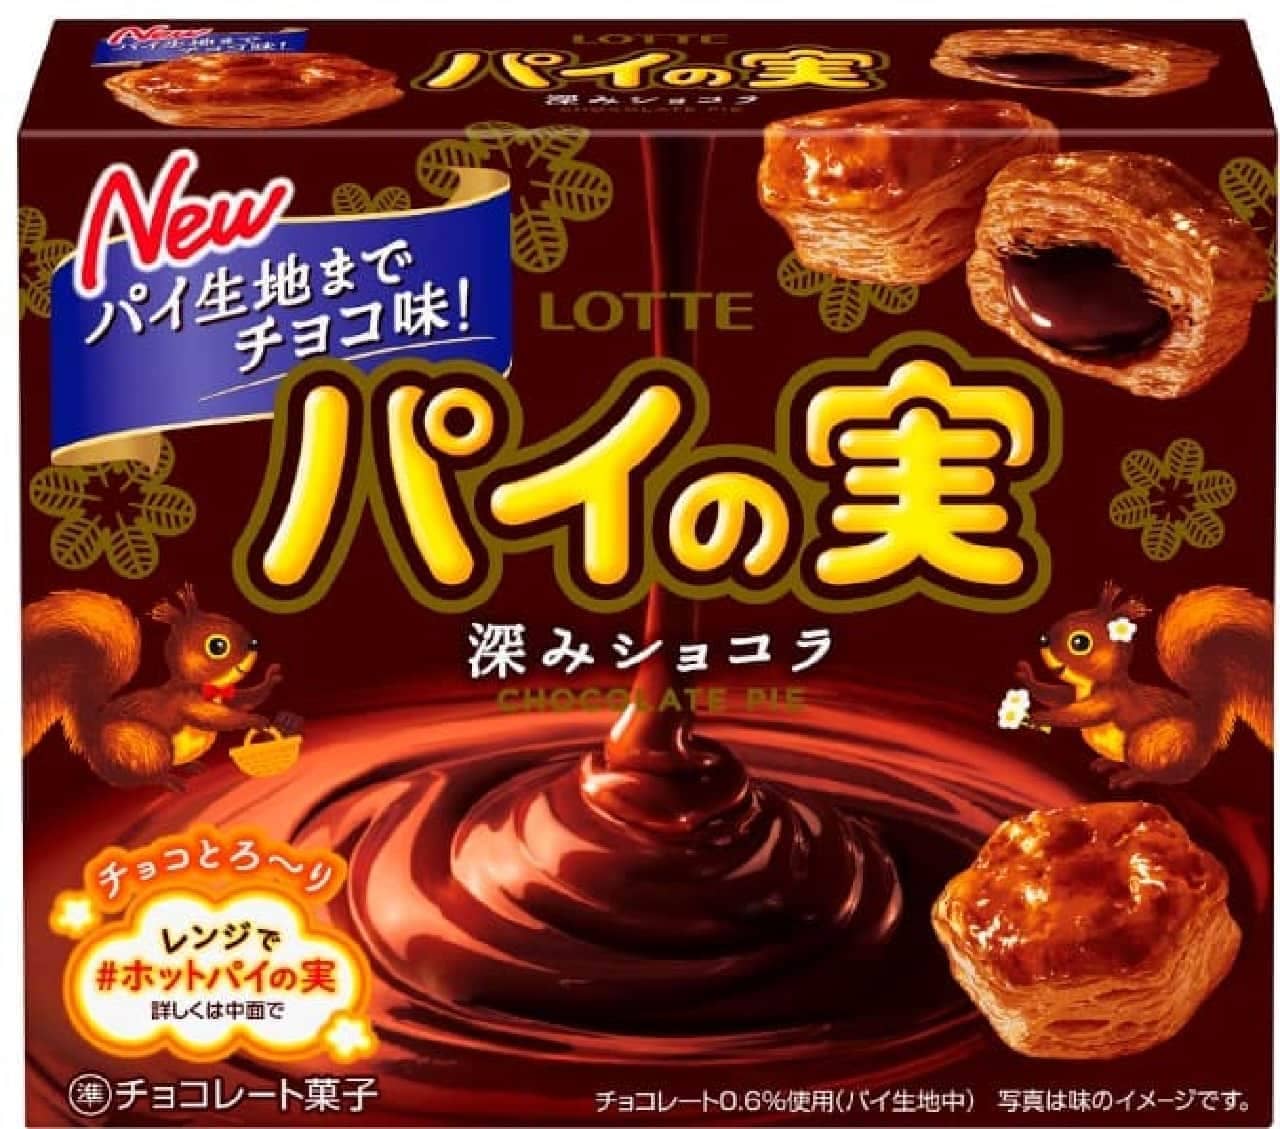 Lotte "Pie Nuts that Taste Chocolate [Deep Chocolat]".